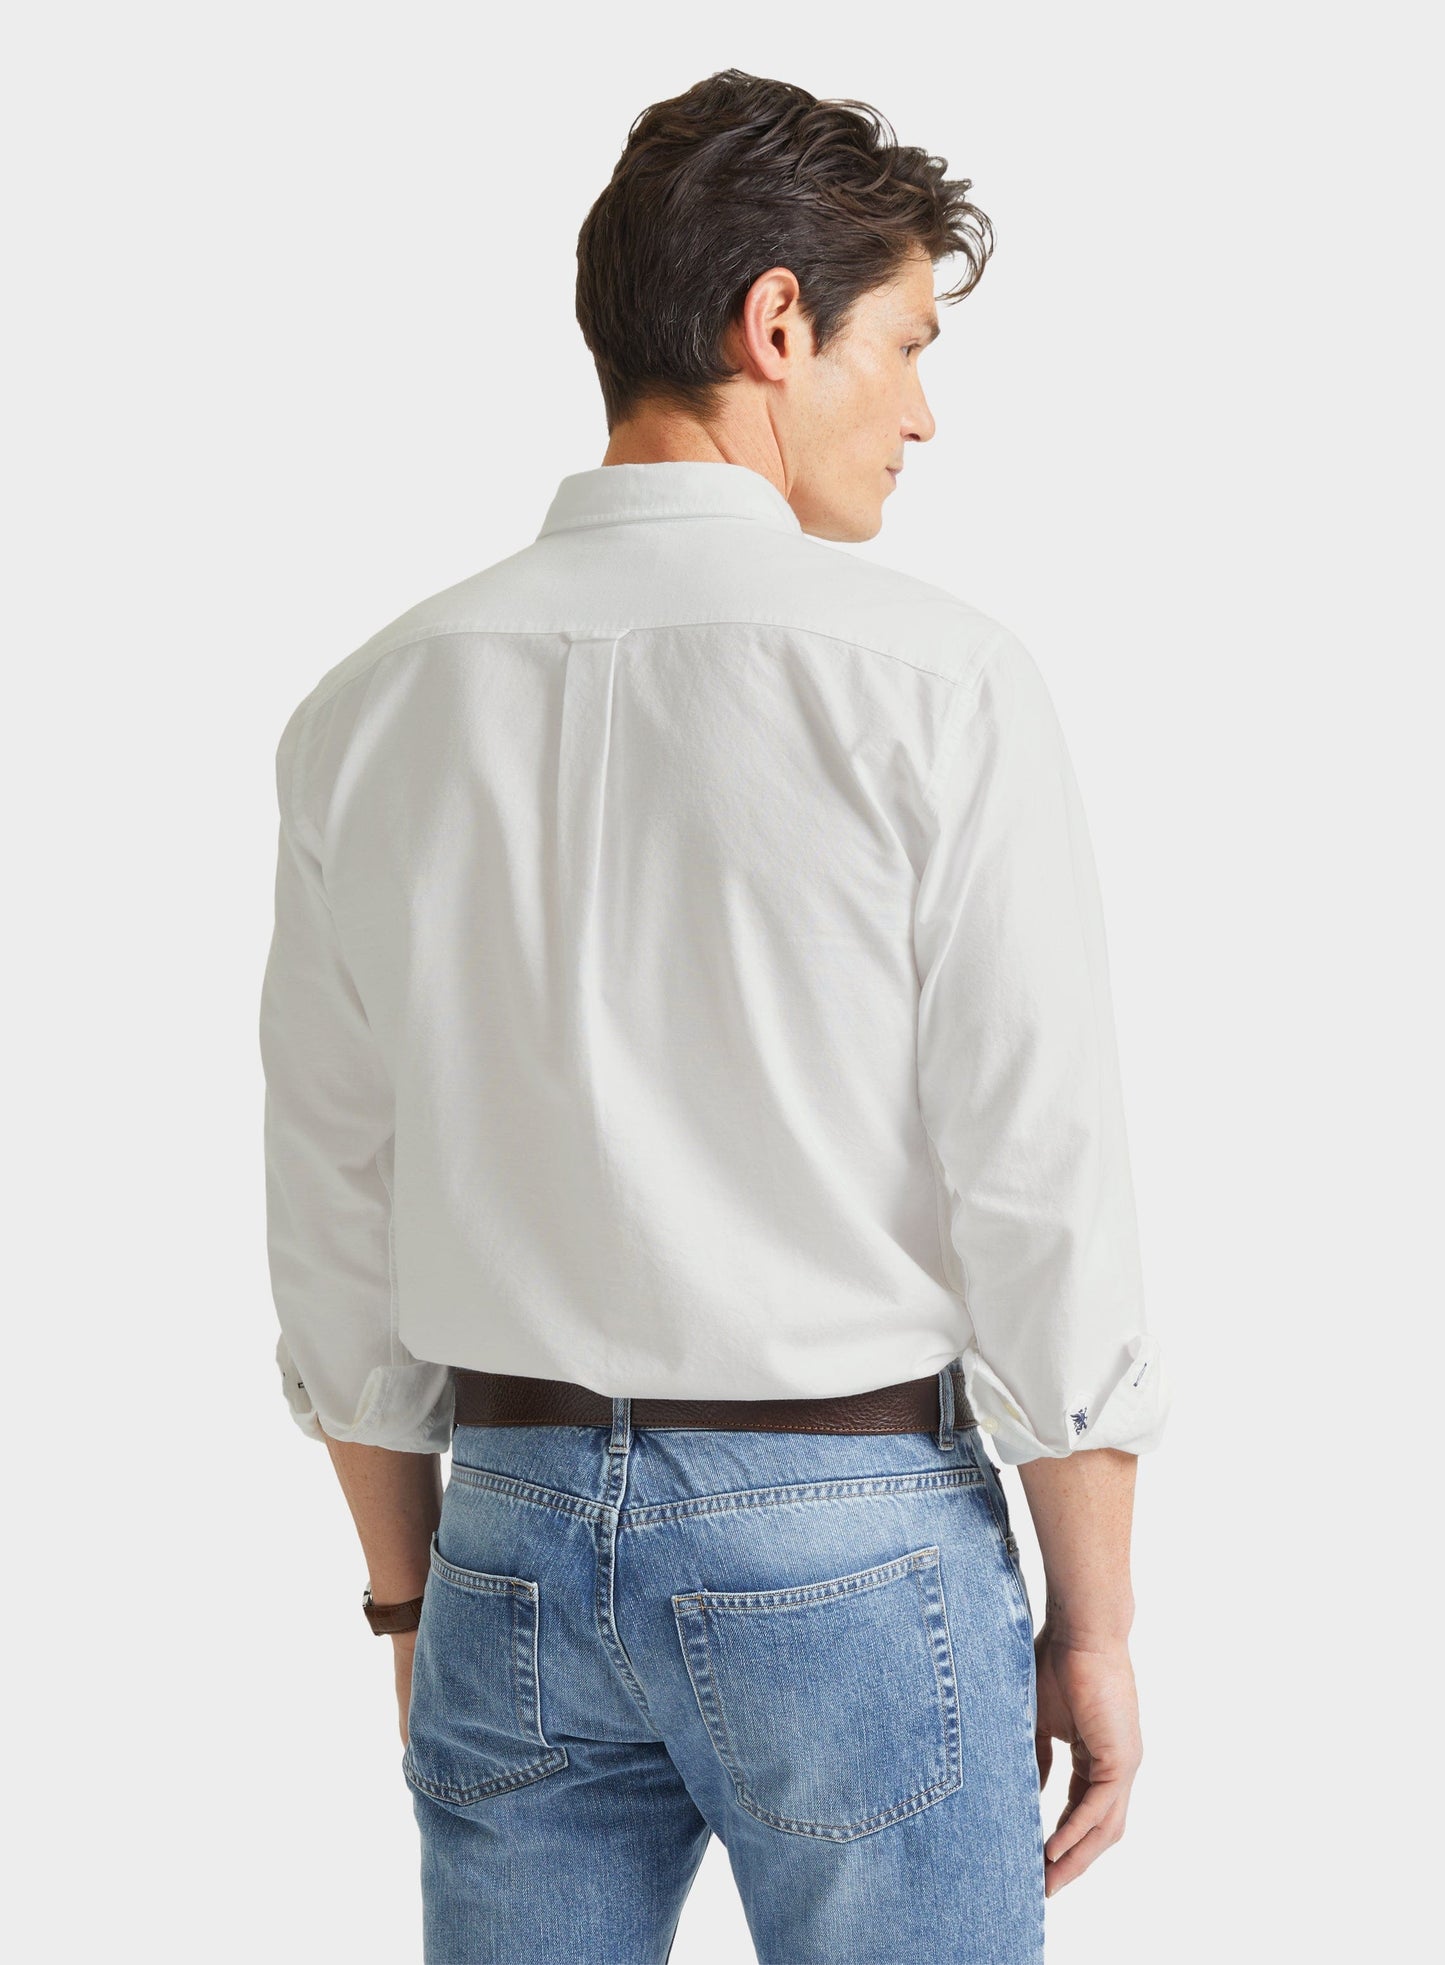 Button Down Oxford Shirt - White